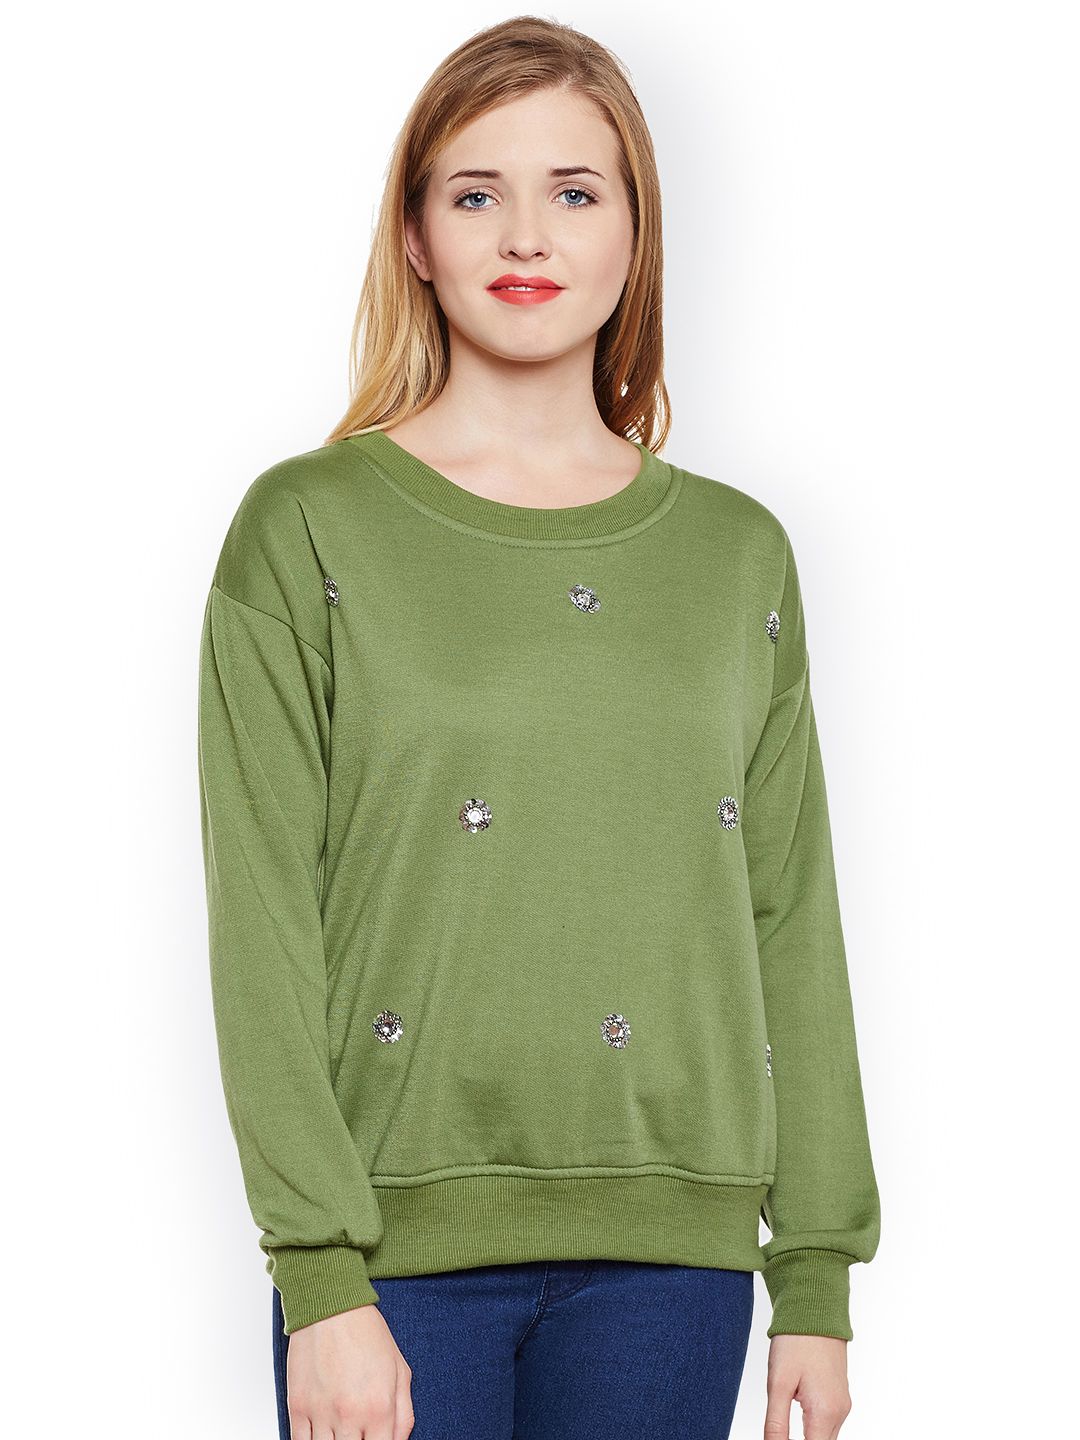 Belle Fille Women Olive Green Solid Sweatshirt Price in India